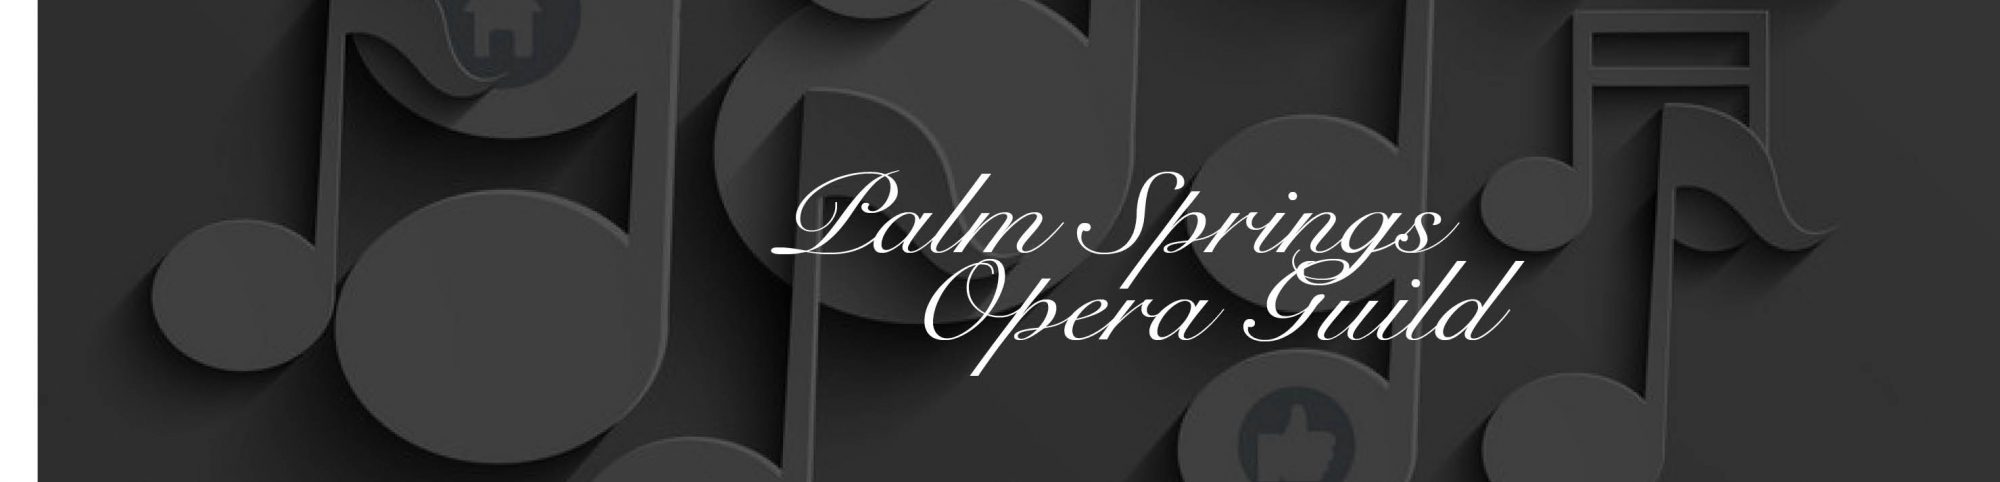 Palm Springs Opera Guild 